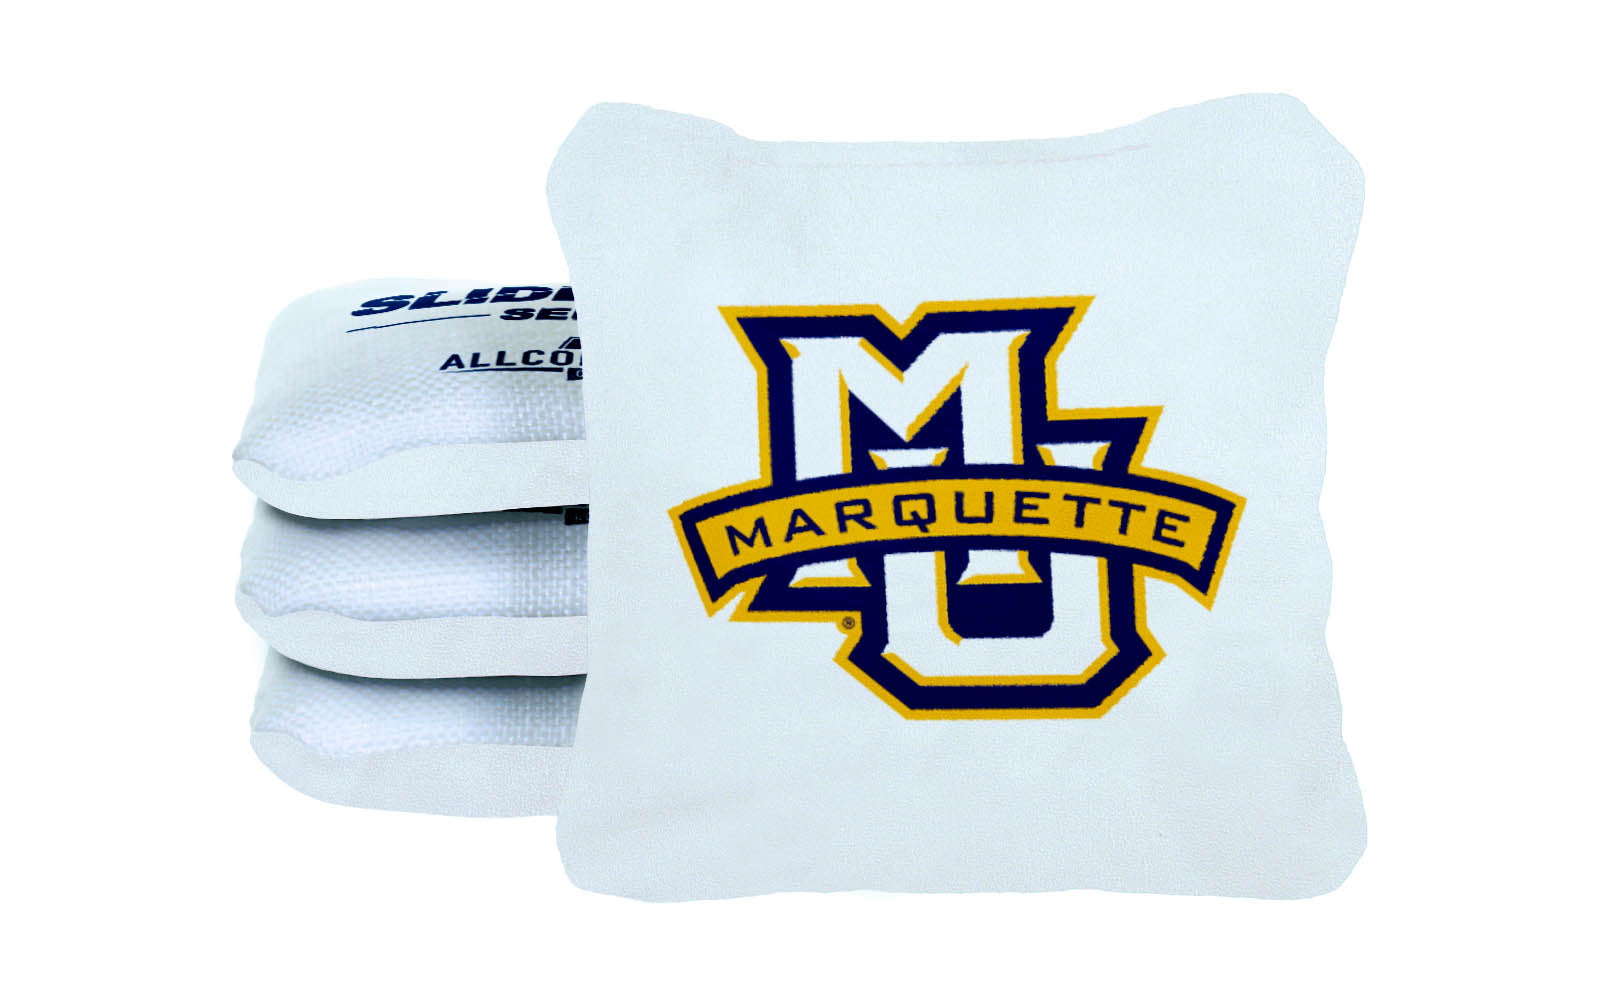 Officially Licensed Collegiate Cornhole Bags - AllCornhole Slide Rite - Set of 4 - Marquette University